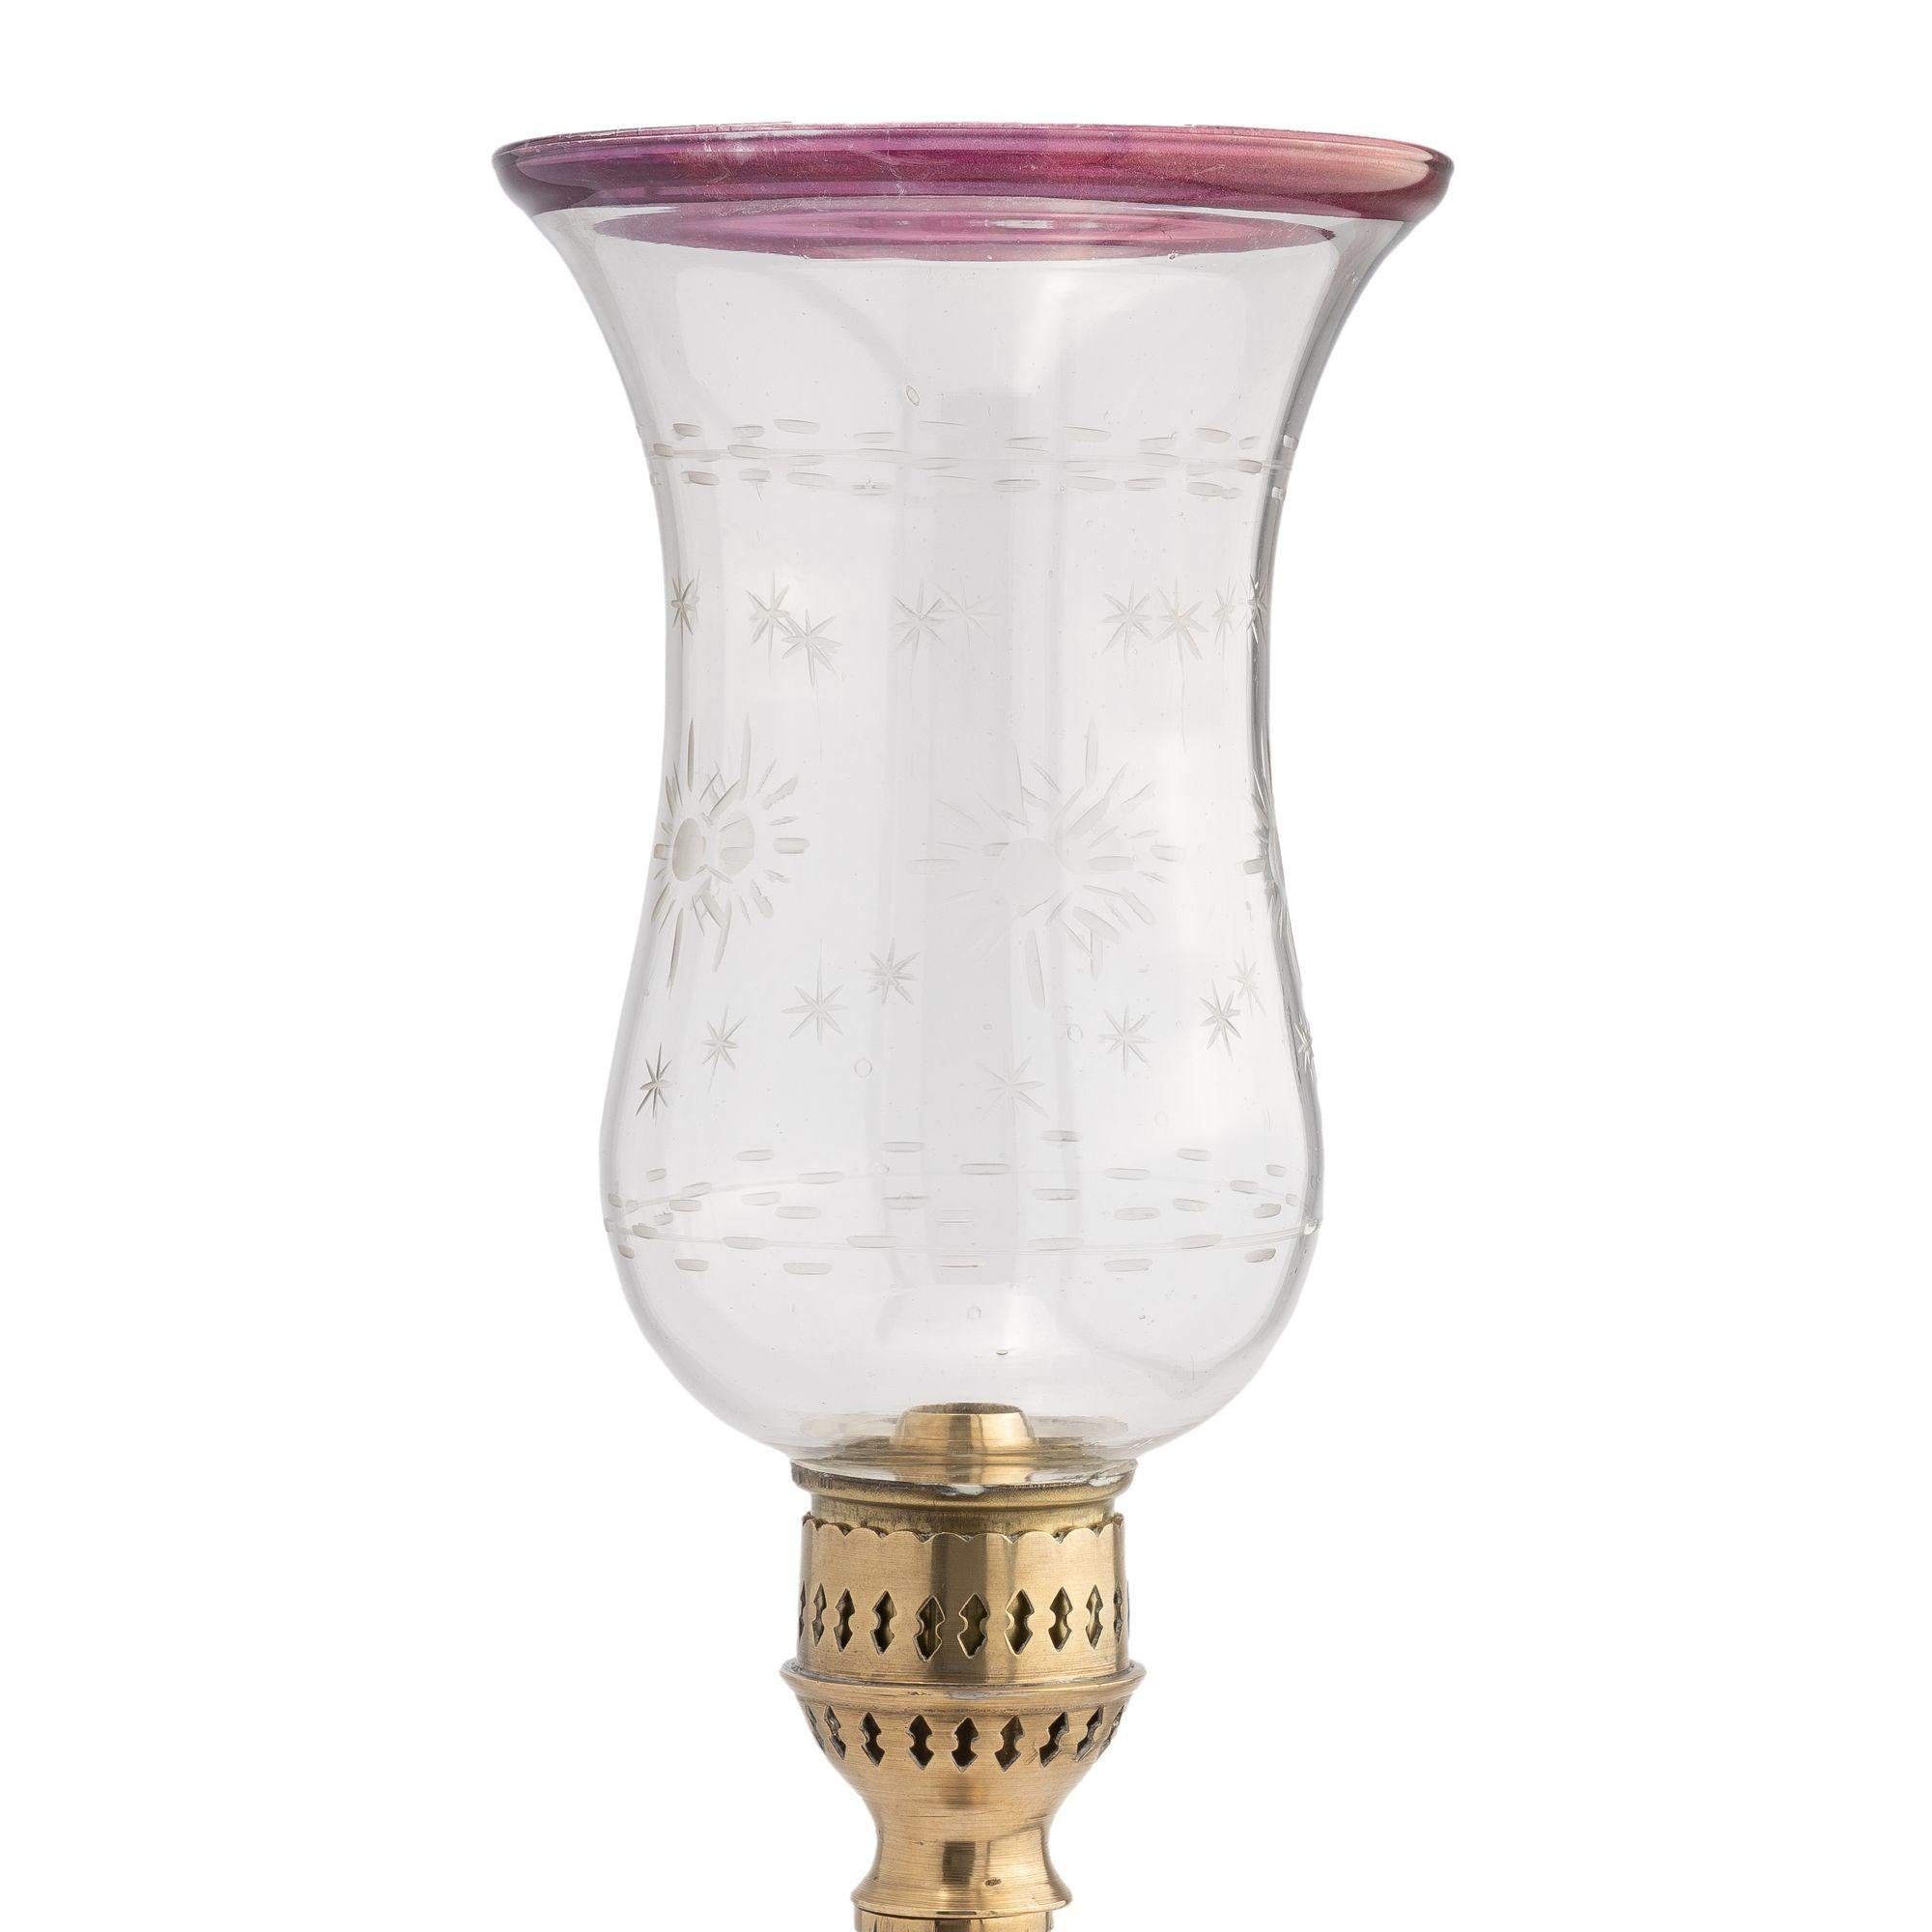 European German Silver Convertible Hurricane Lamp with Glass Shade, 1830-50